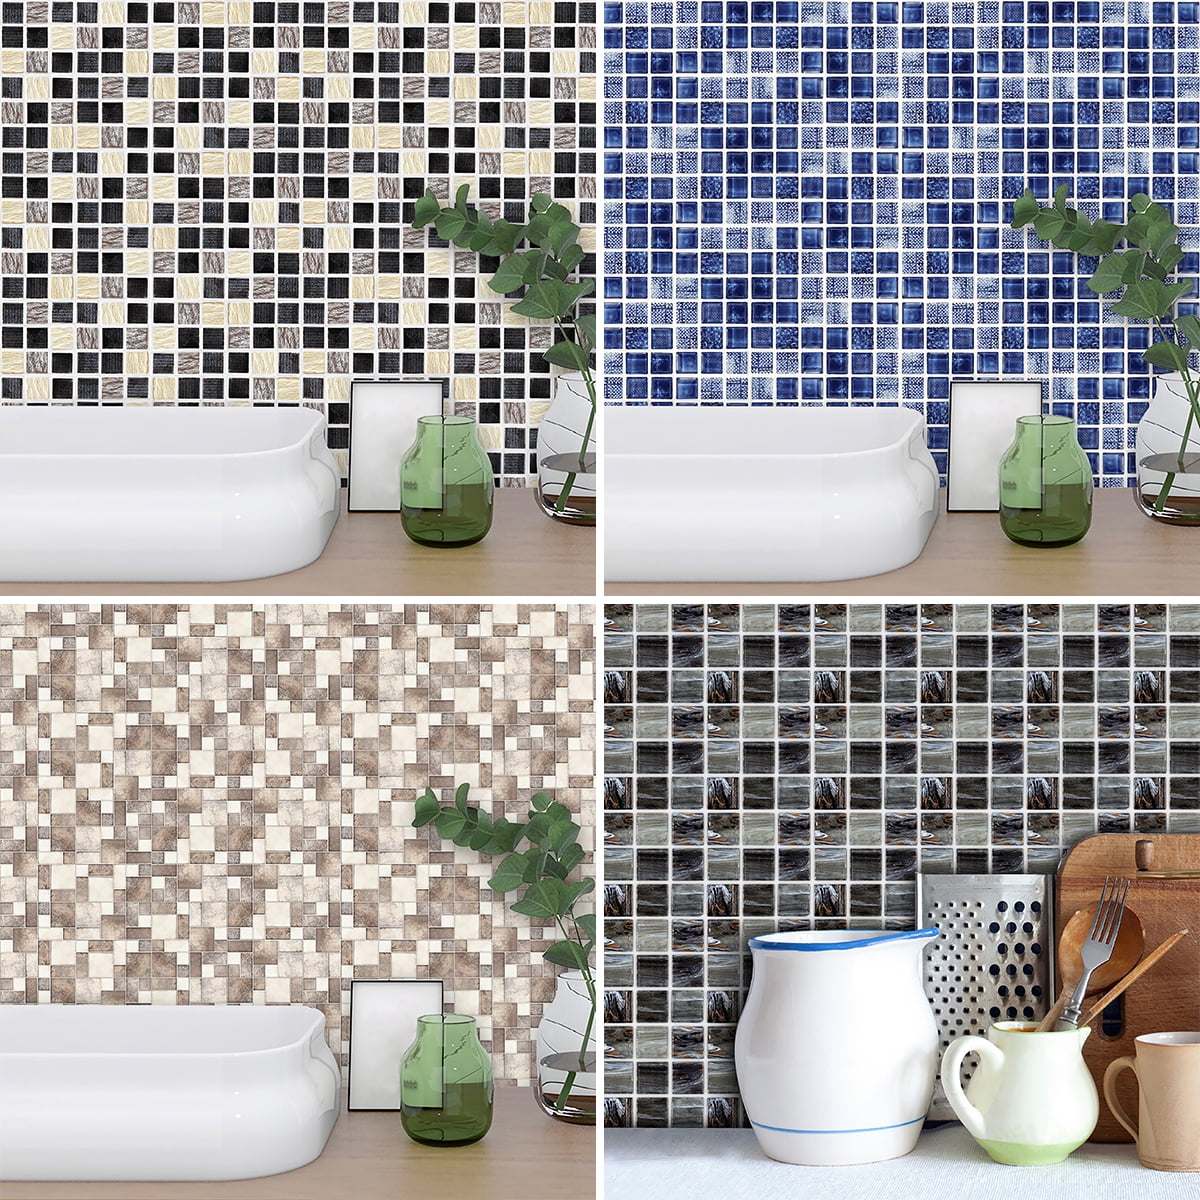 3D DIY Tile Stickers Bathroom Mosaic Sticker Self-adhesive Wall Decor Home 10PCS 